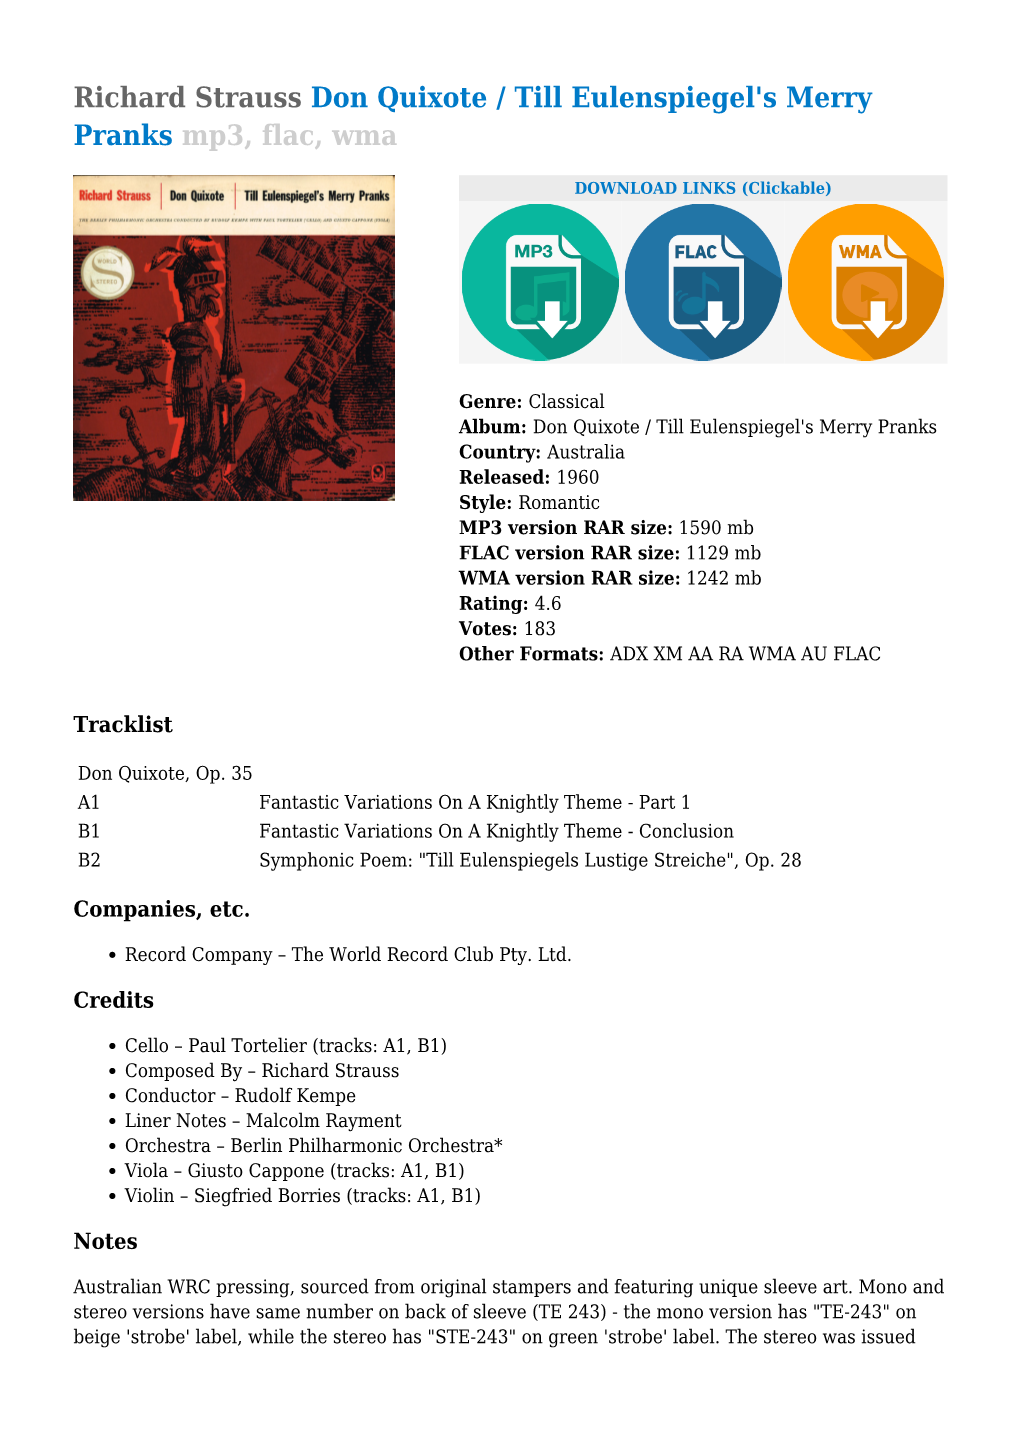 Richard Strauss Don Quixote / Till Eulenspiegel's Merry Pranks Mp3, Flac, Wma